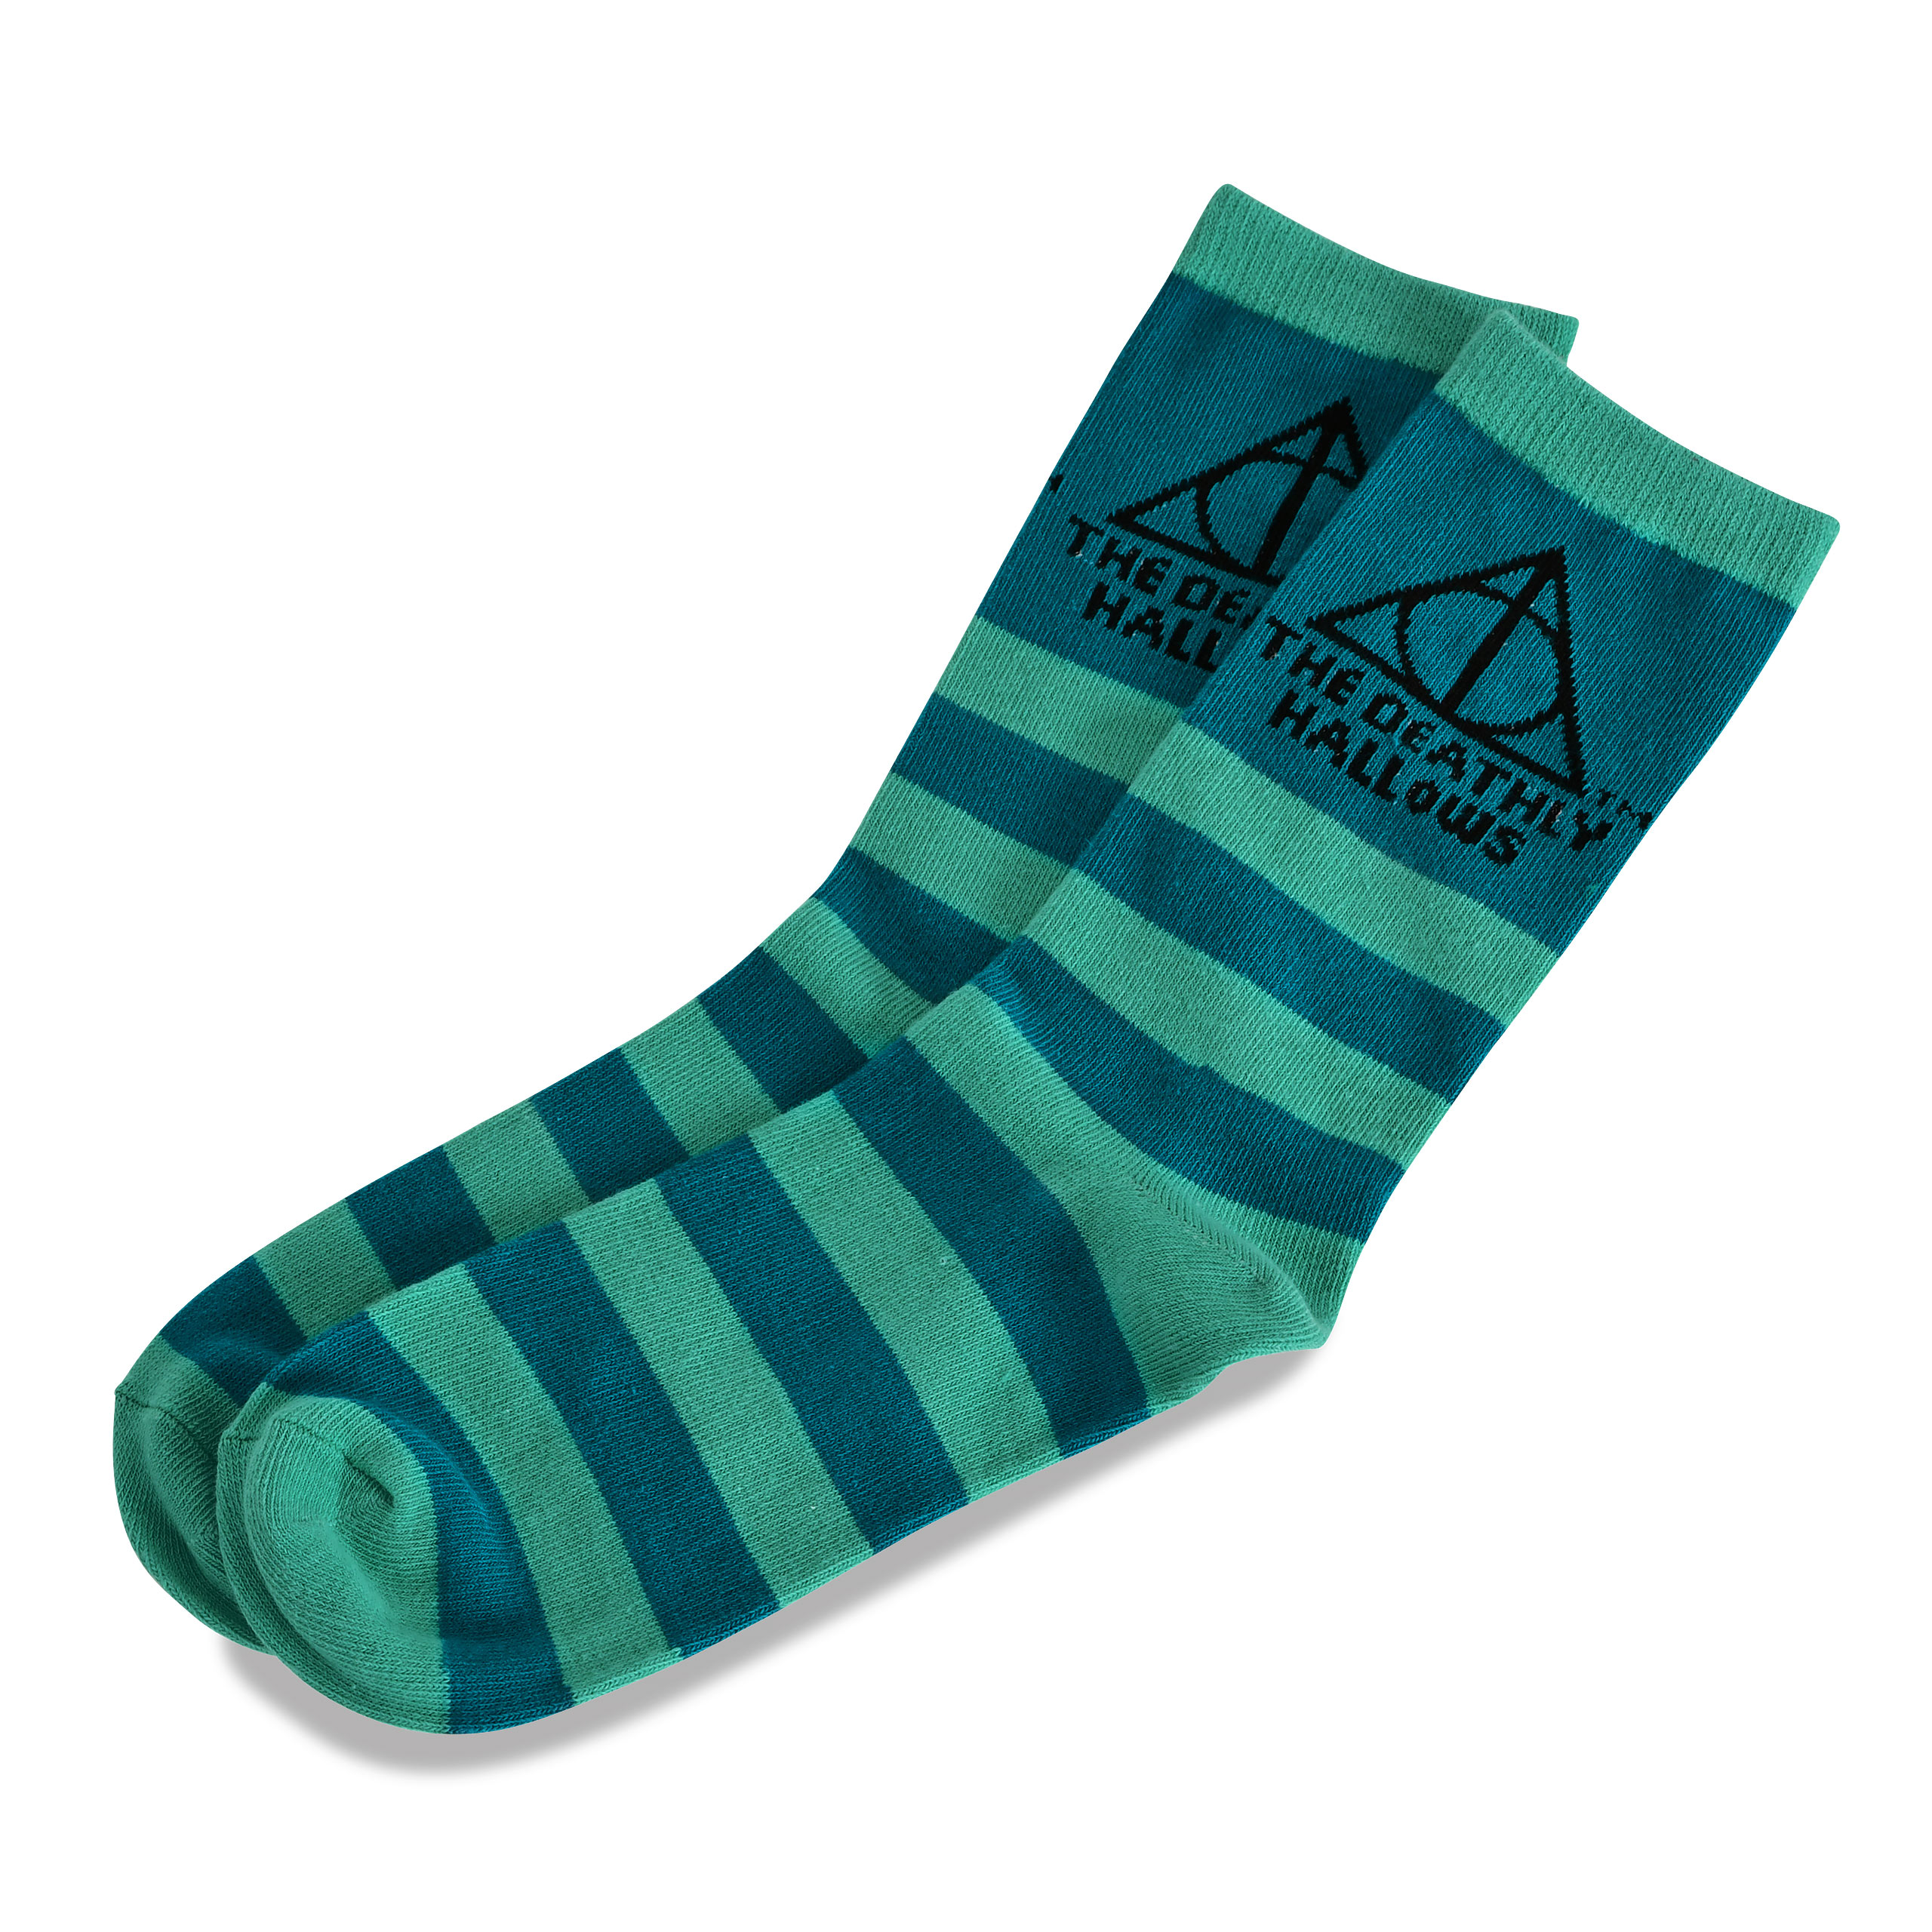 Harry Potter - Deathly Hallows Socken blau-grün